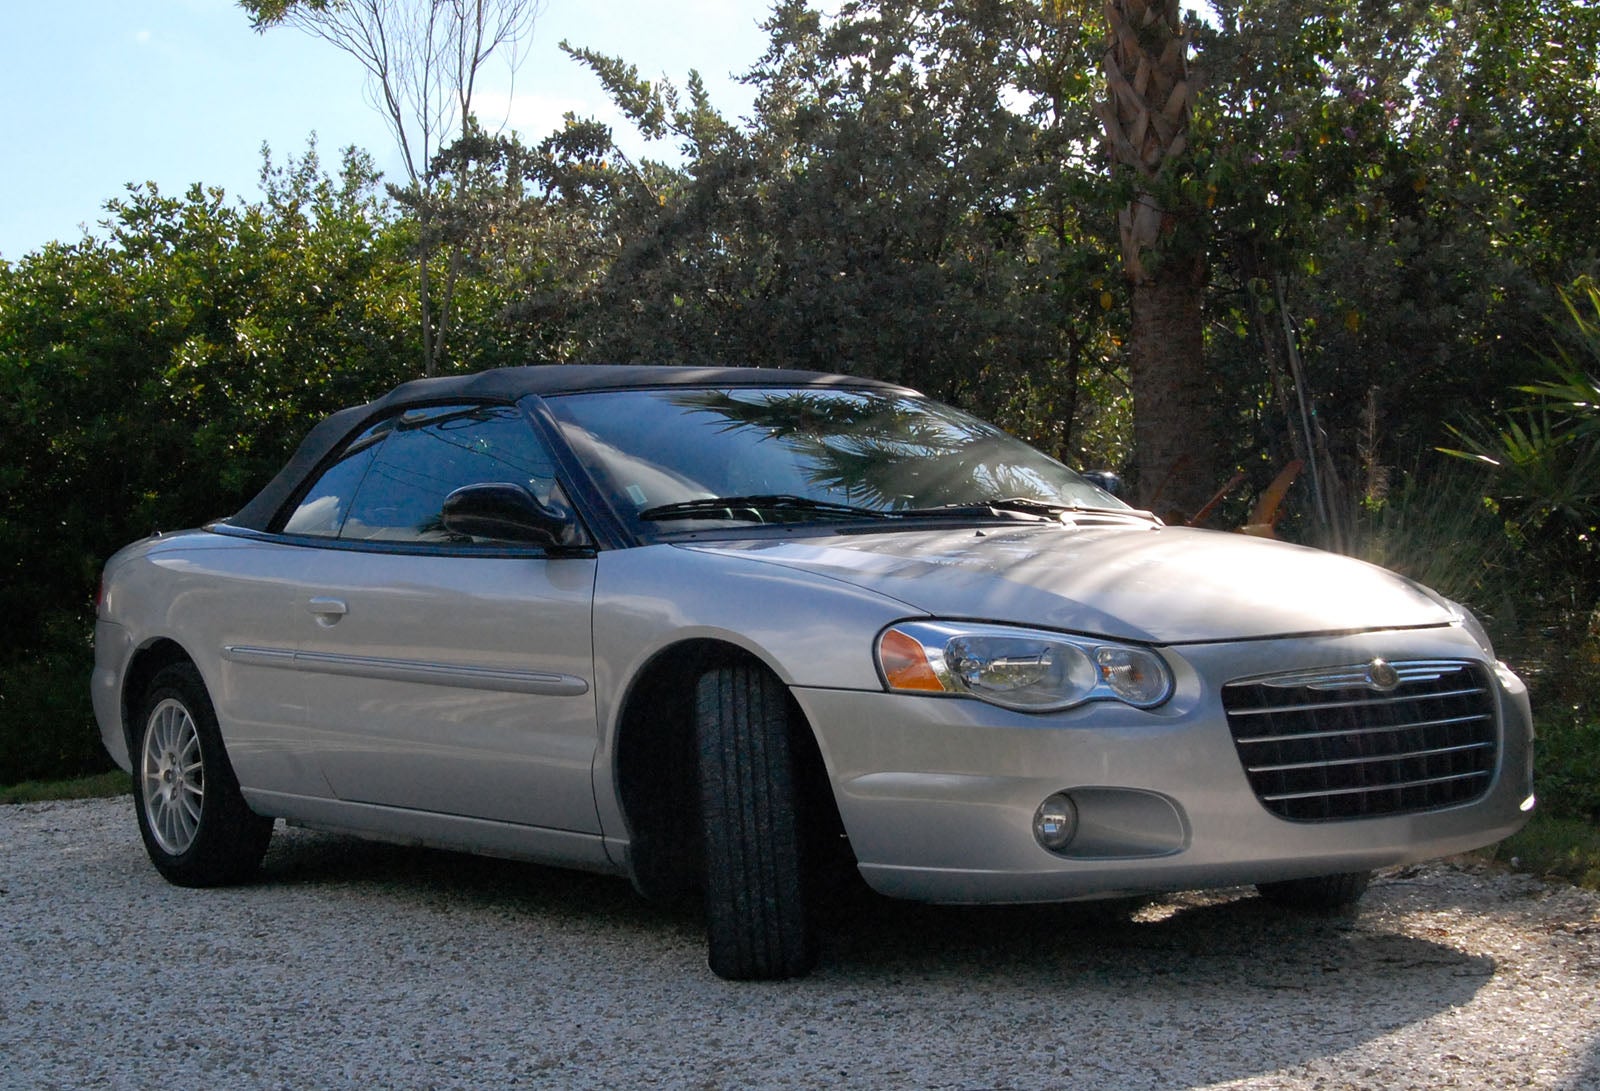 2005 Chrysler sebring convertible specifications #1